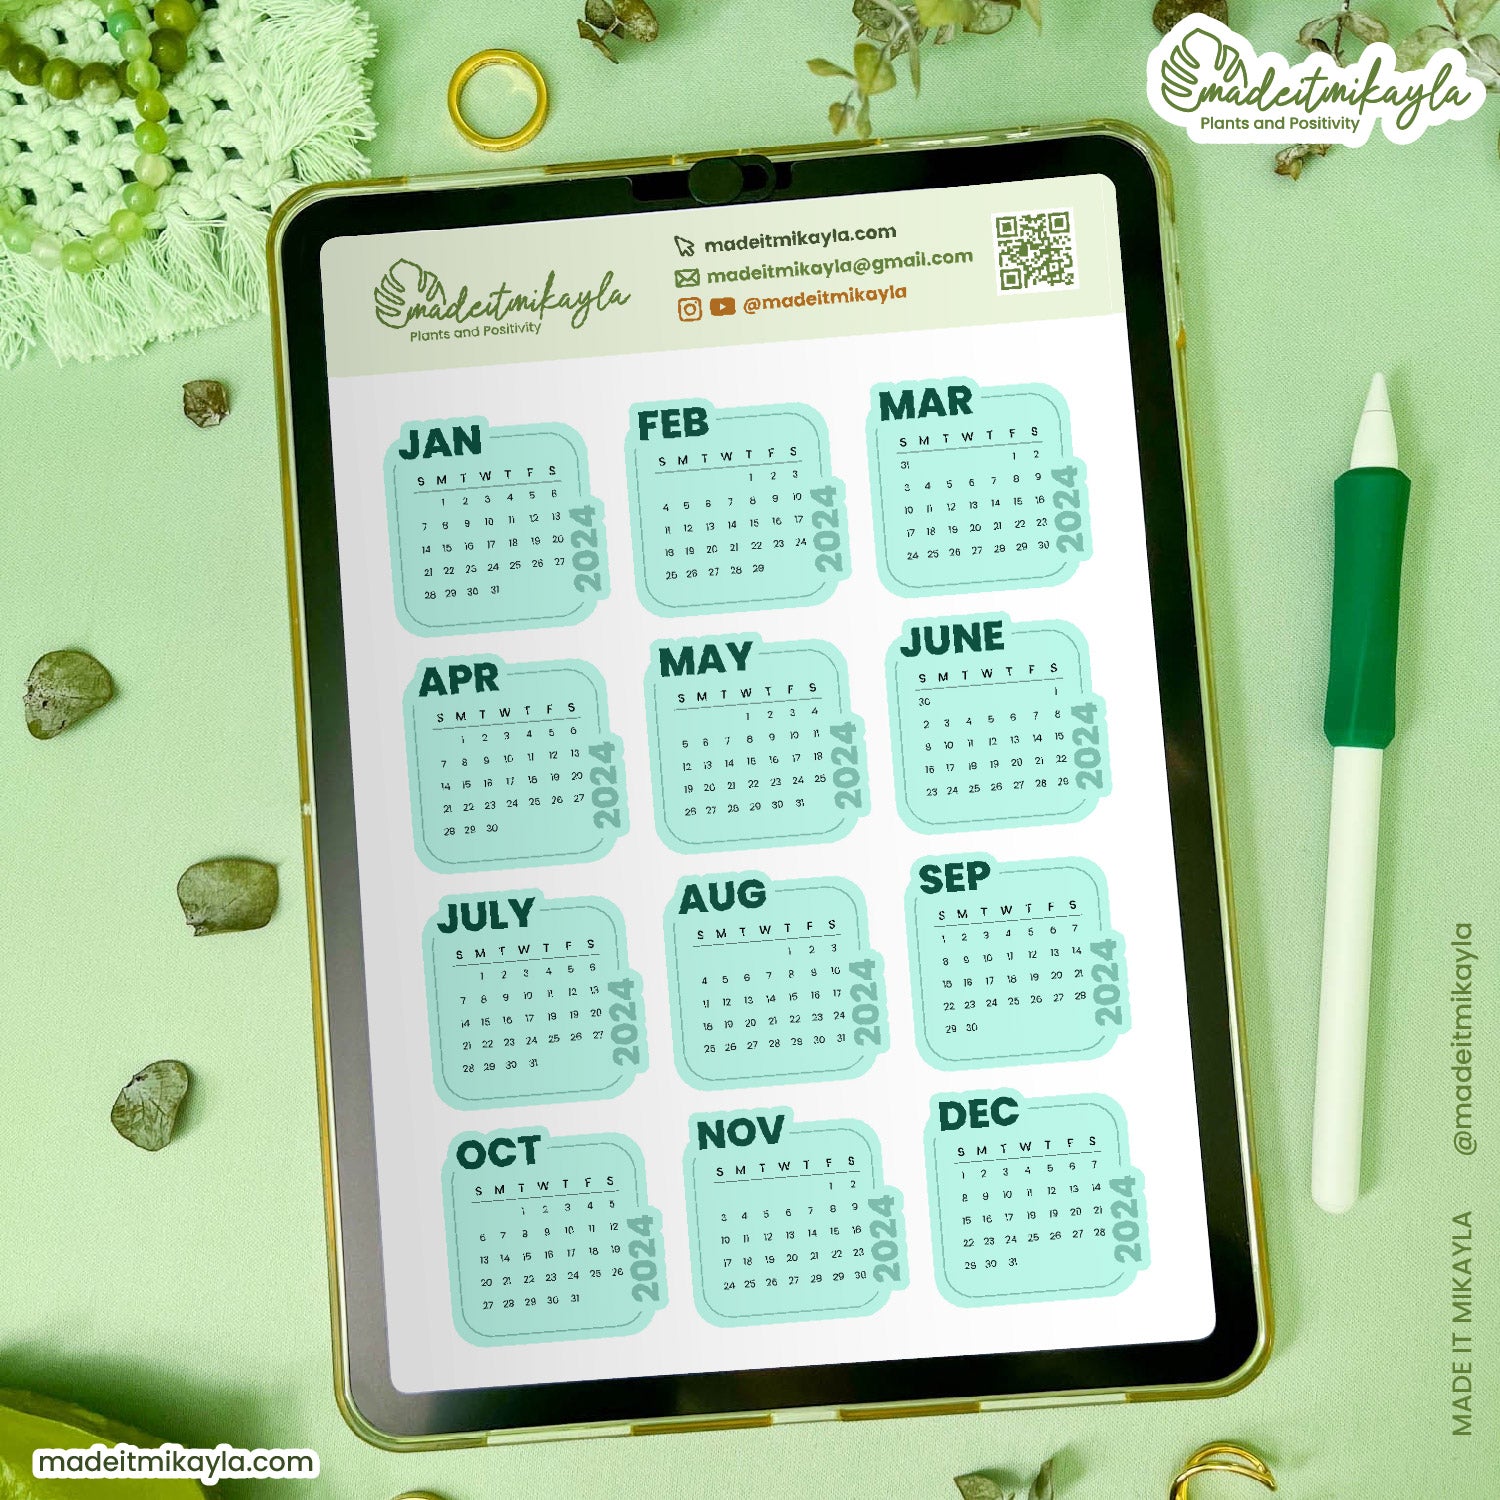 Teal 2024 Calendars Digital Stickers | MadeItMikayla